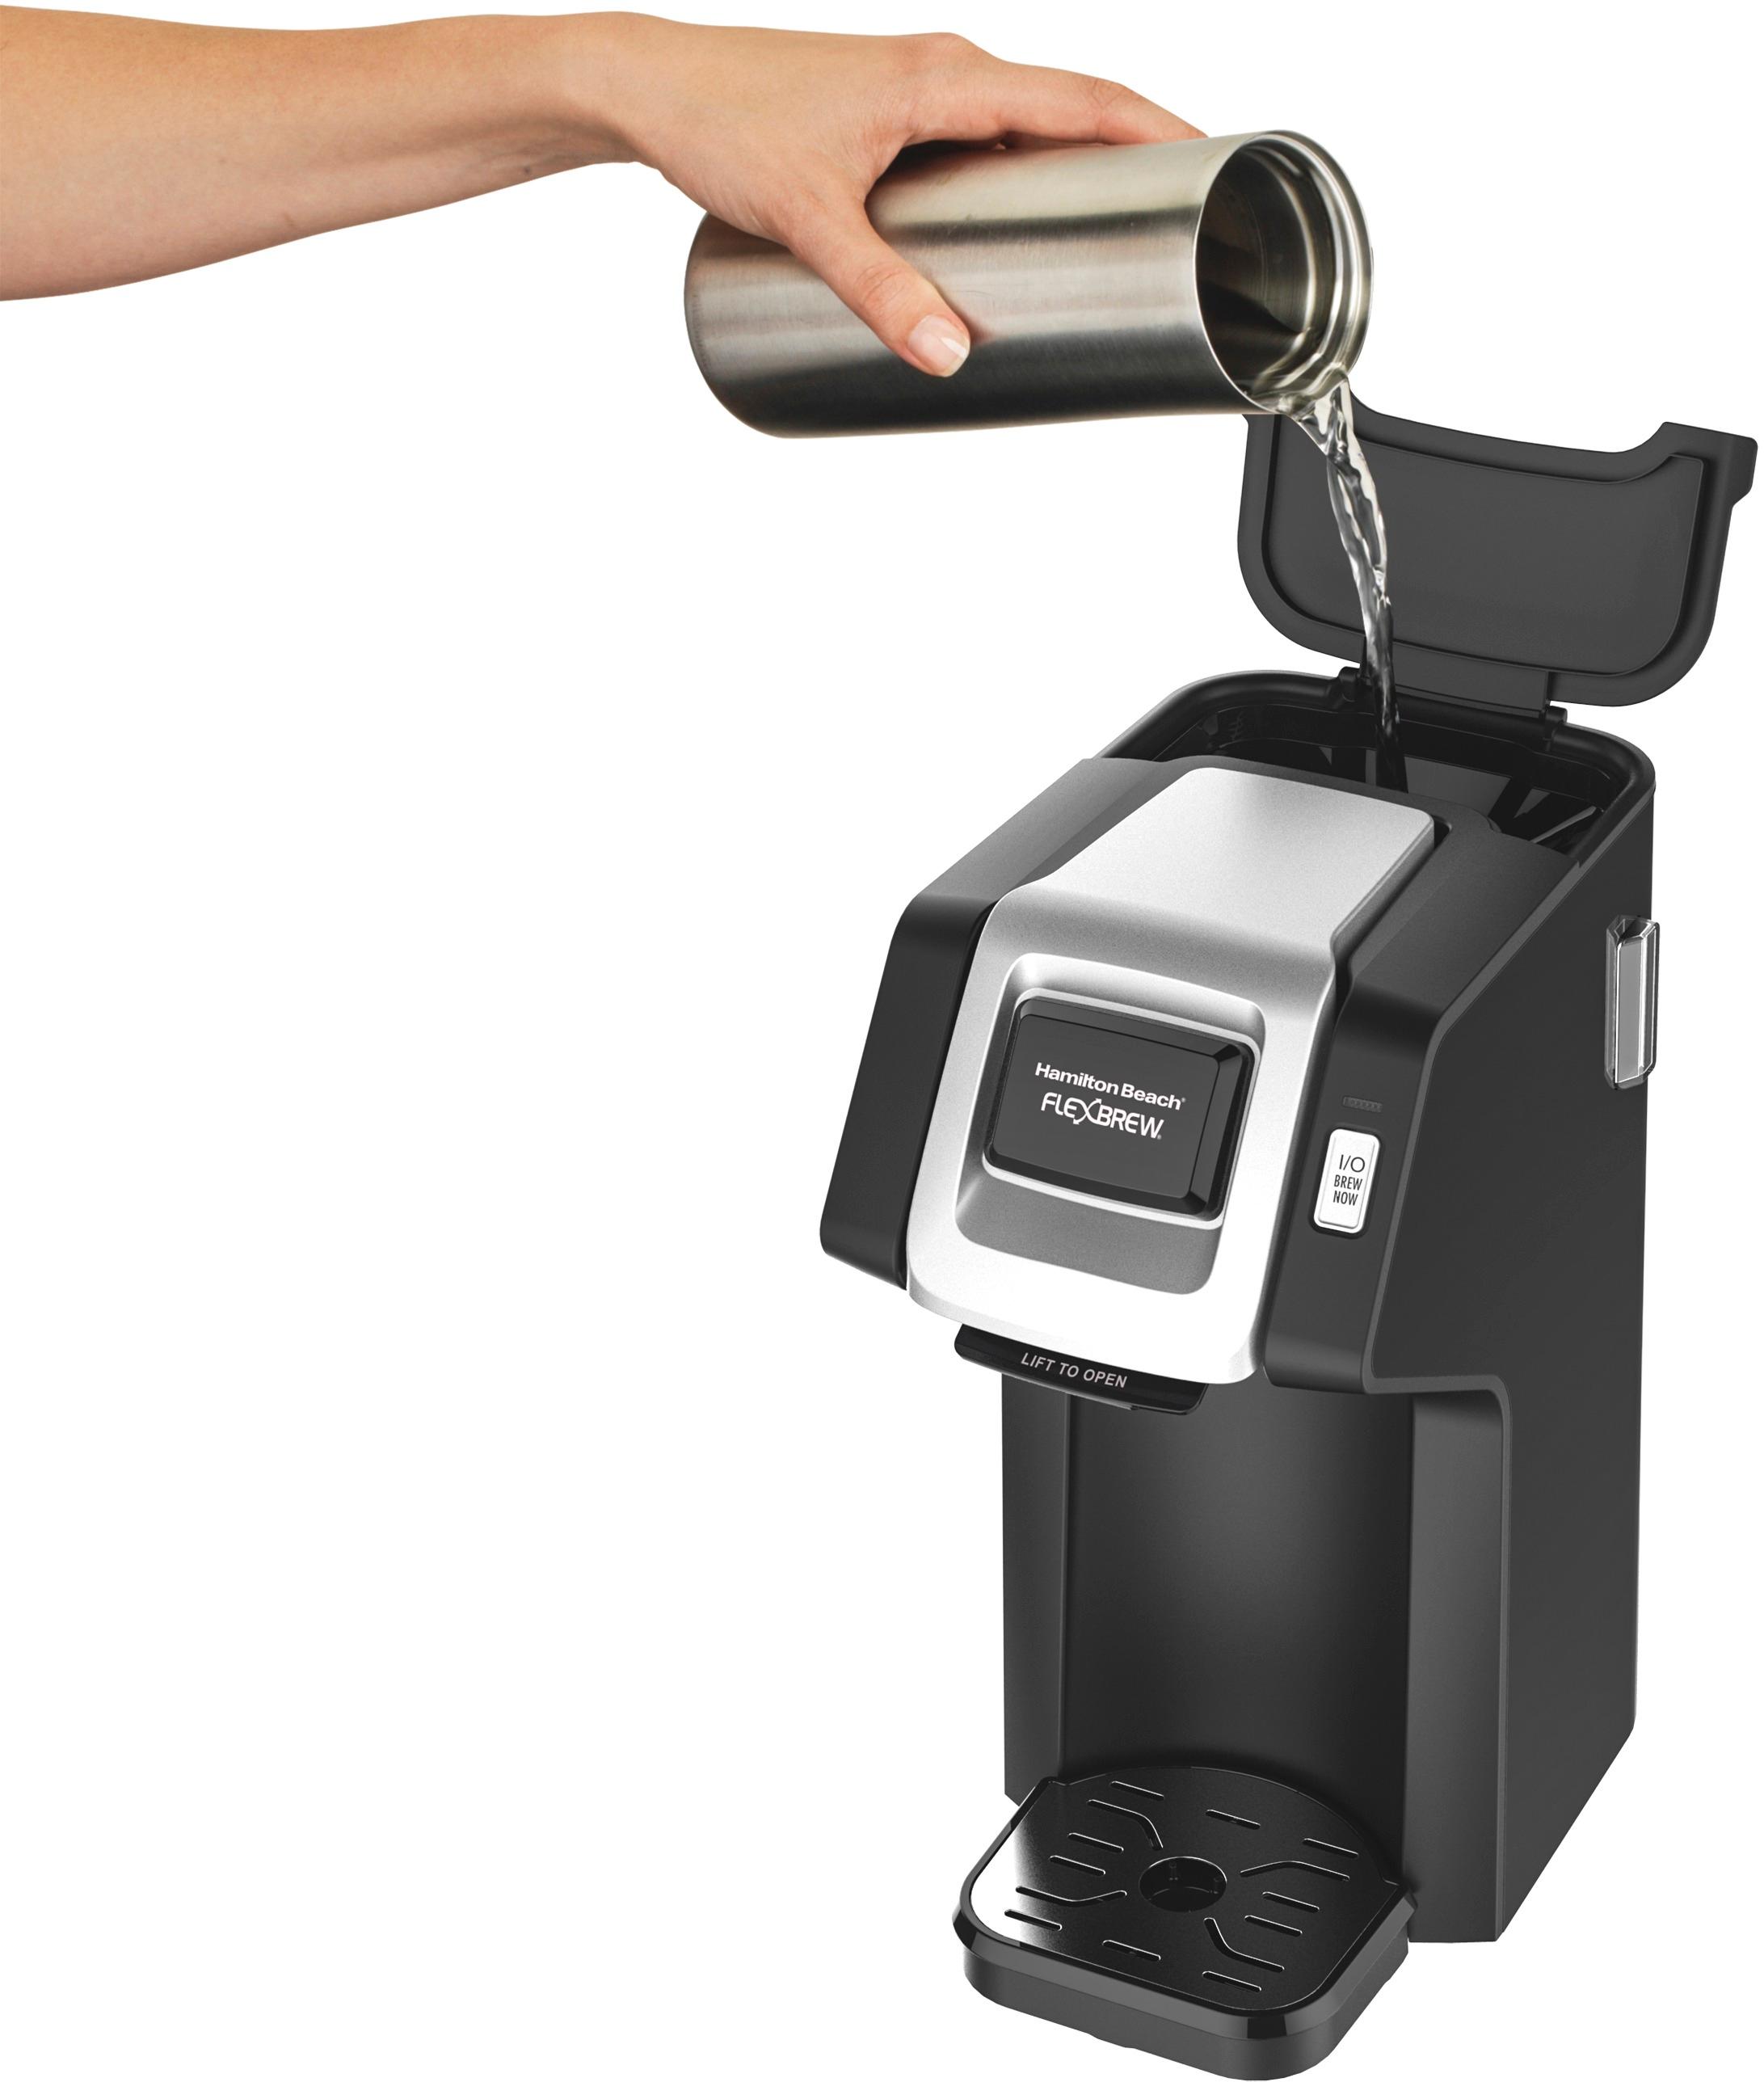 Hamilton Beach FlexBrew Coffee Maker Black 49974 - Best Buy